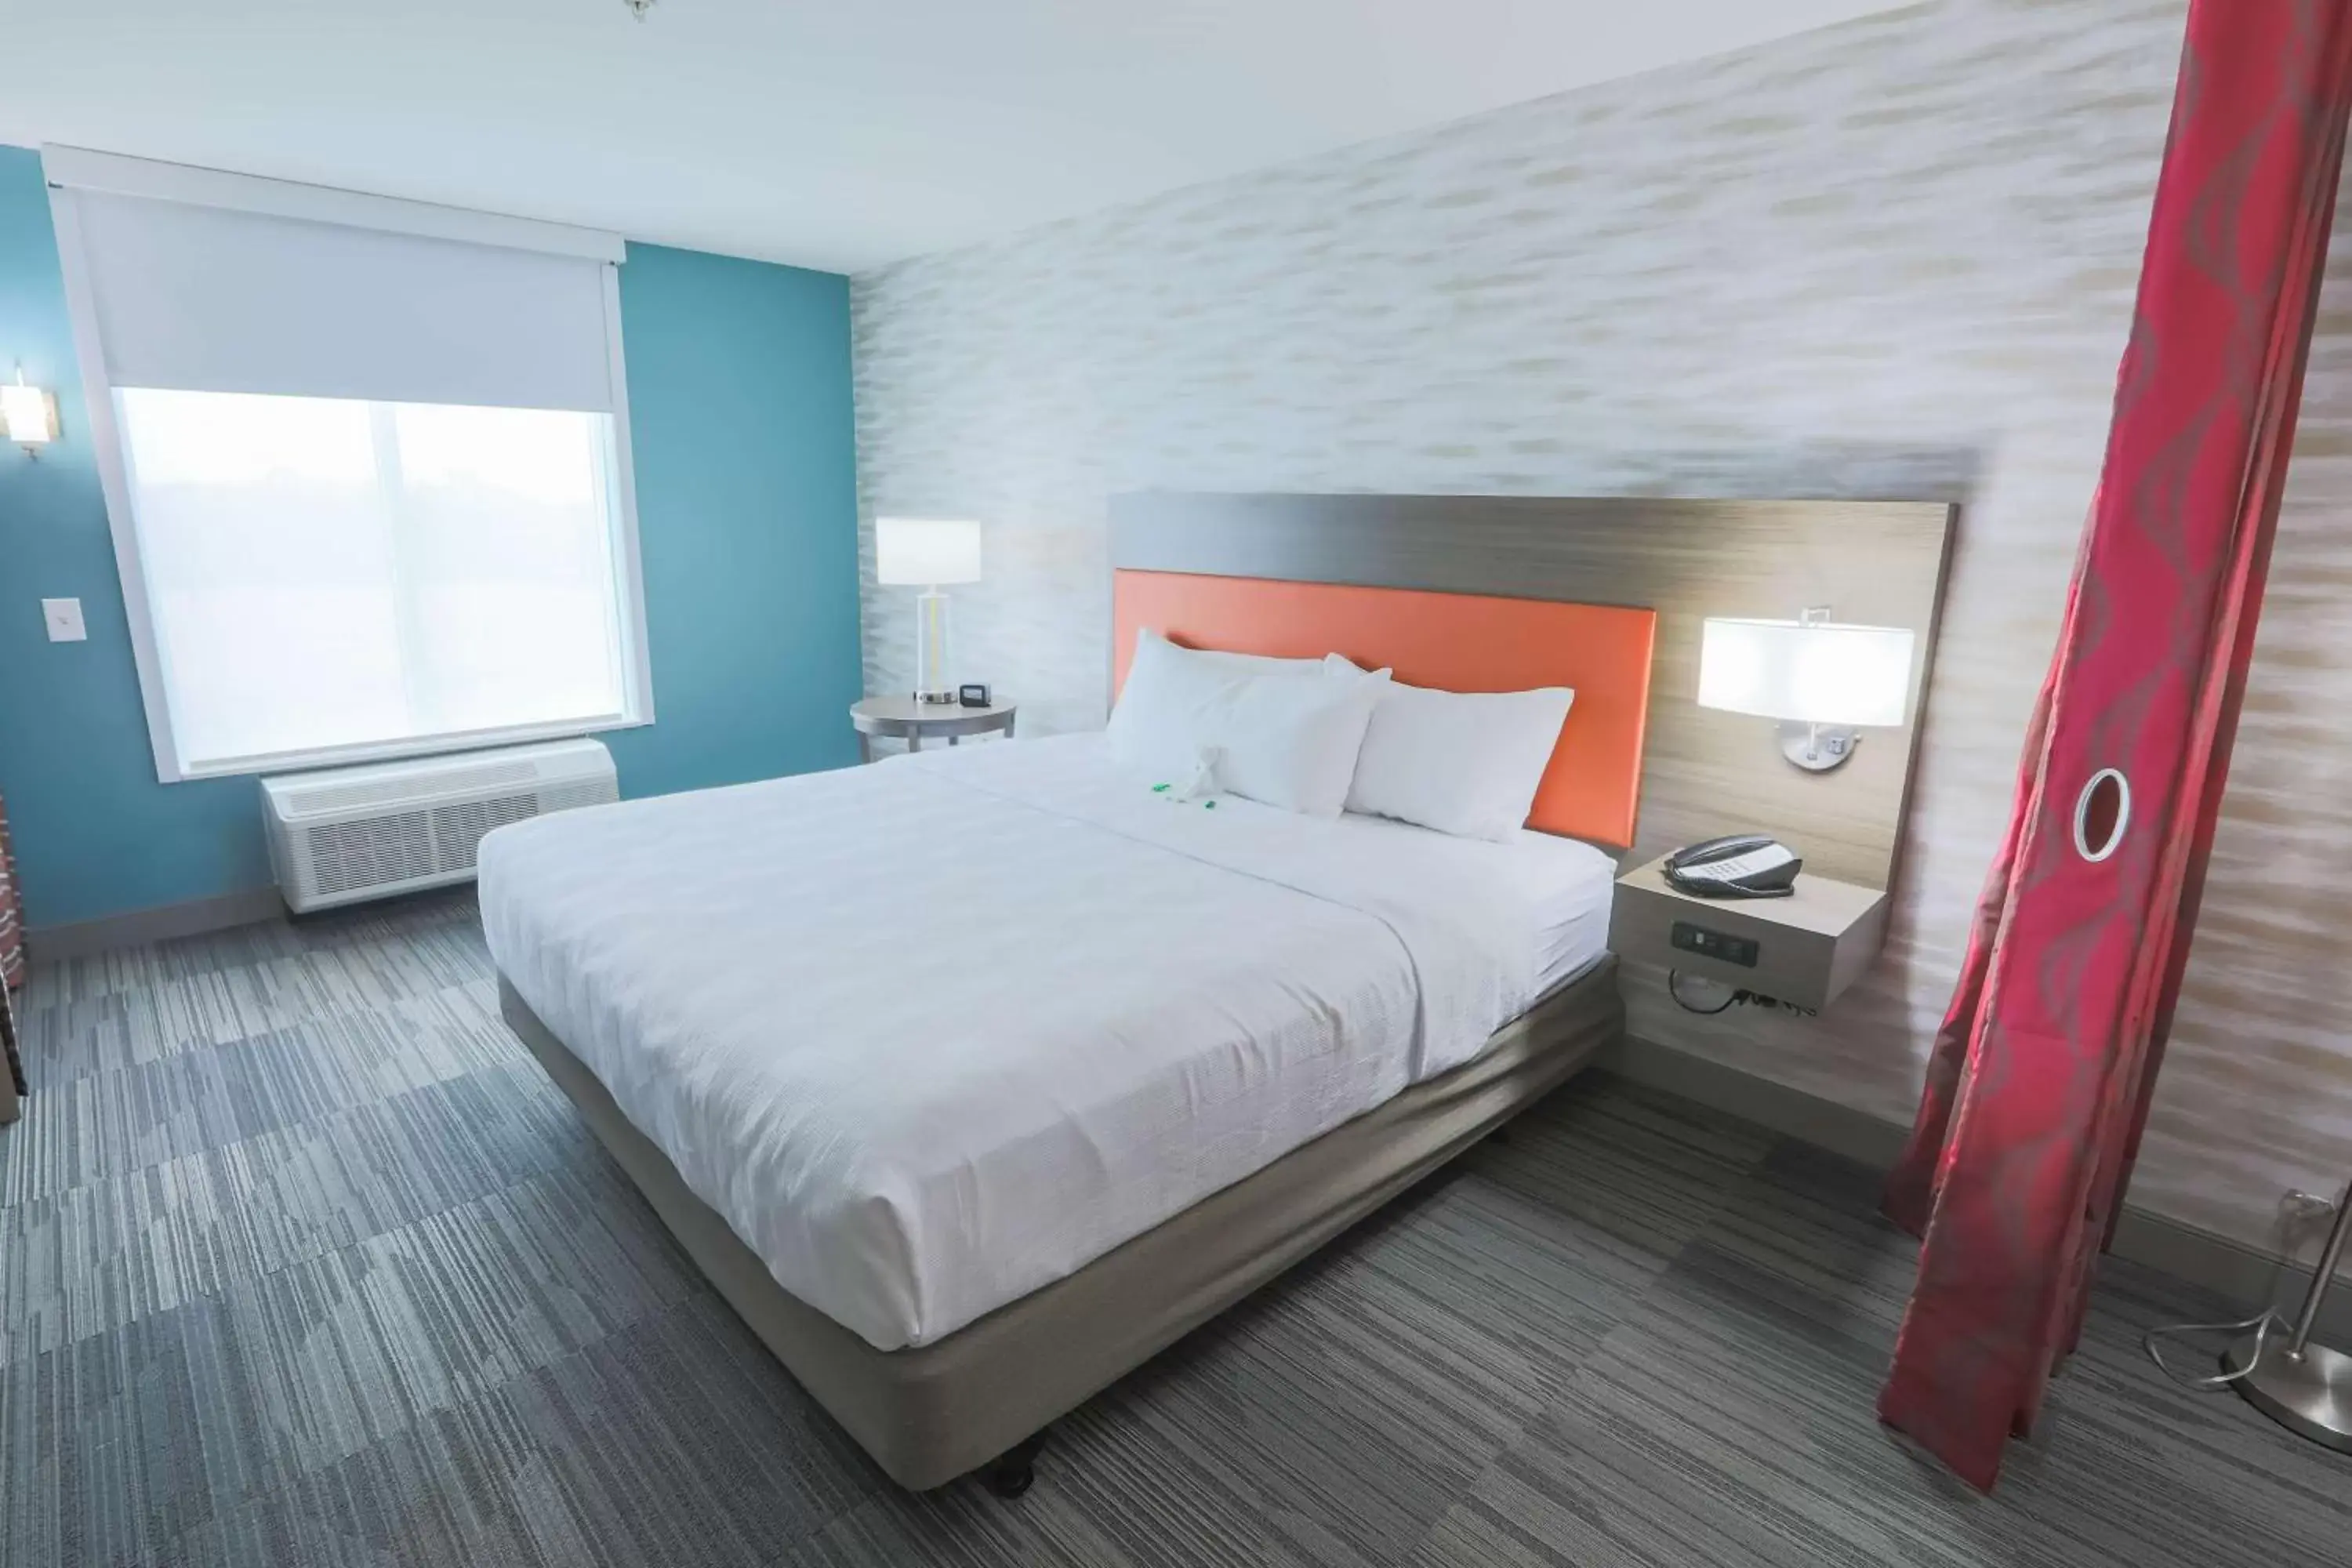 Bed in Home2 Suites By Hilton Cumming Atlanta, Ga